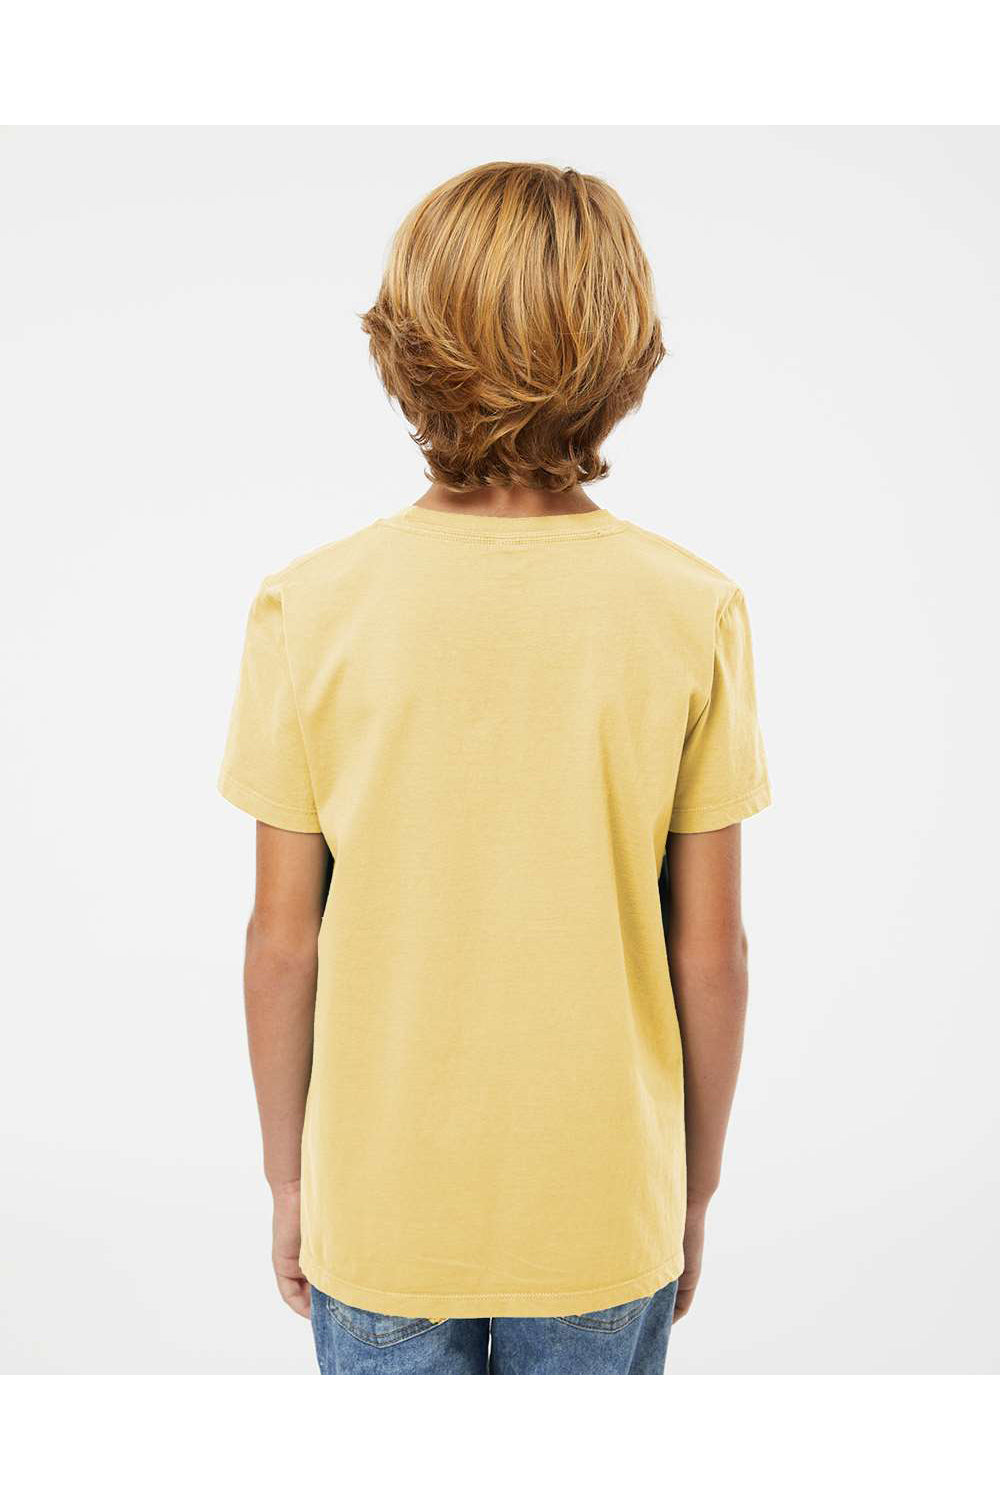 SoftShirts 402 Youth Organic Short Sleeve Crewneck T-Shirt Wheat Yellow Model Back